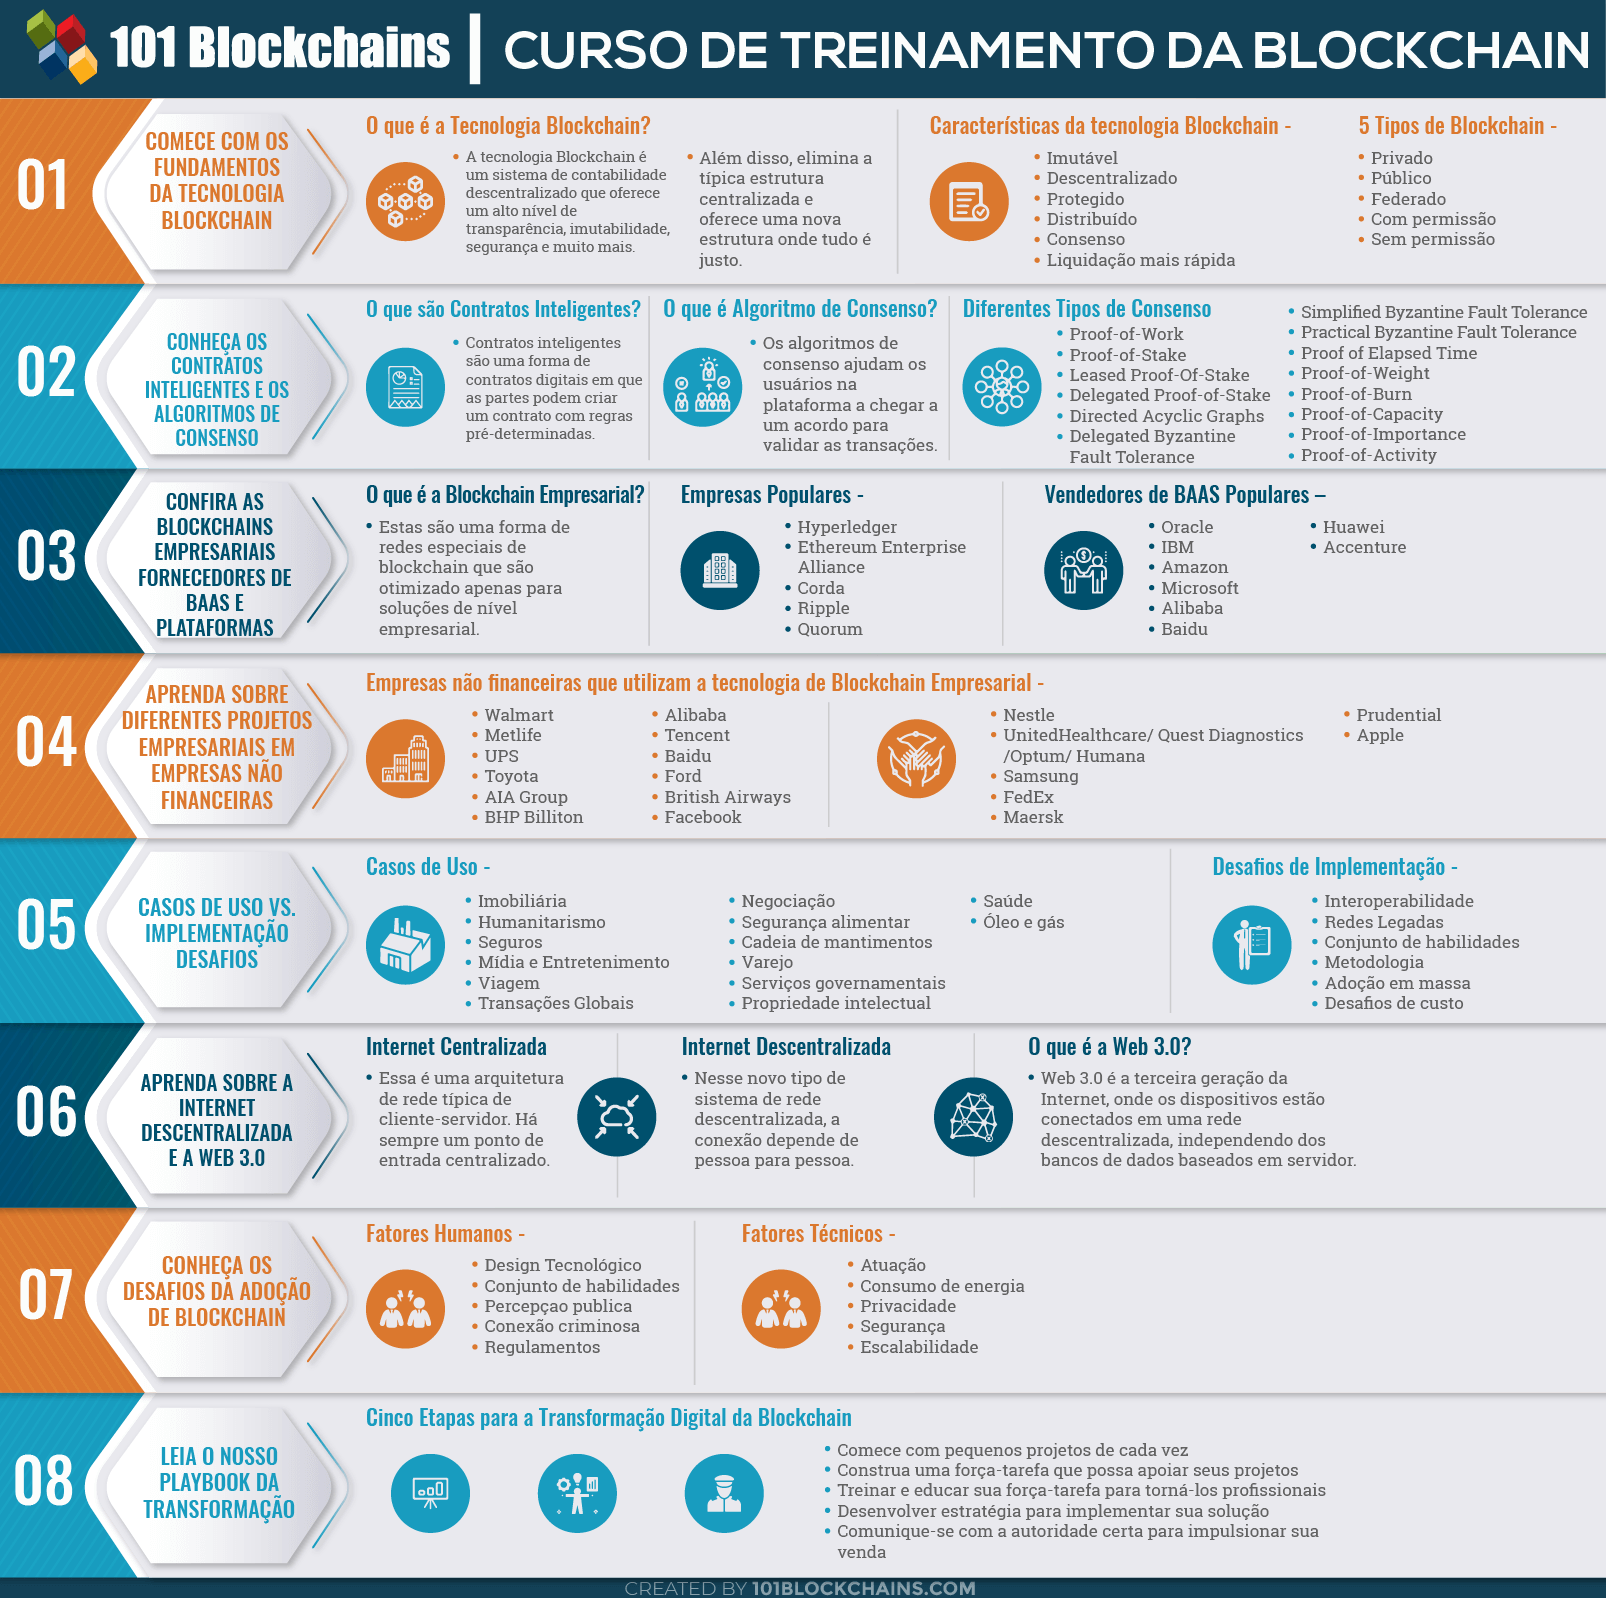 Curso de Treinamento da Blockchain